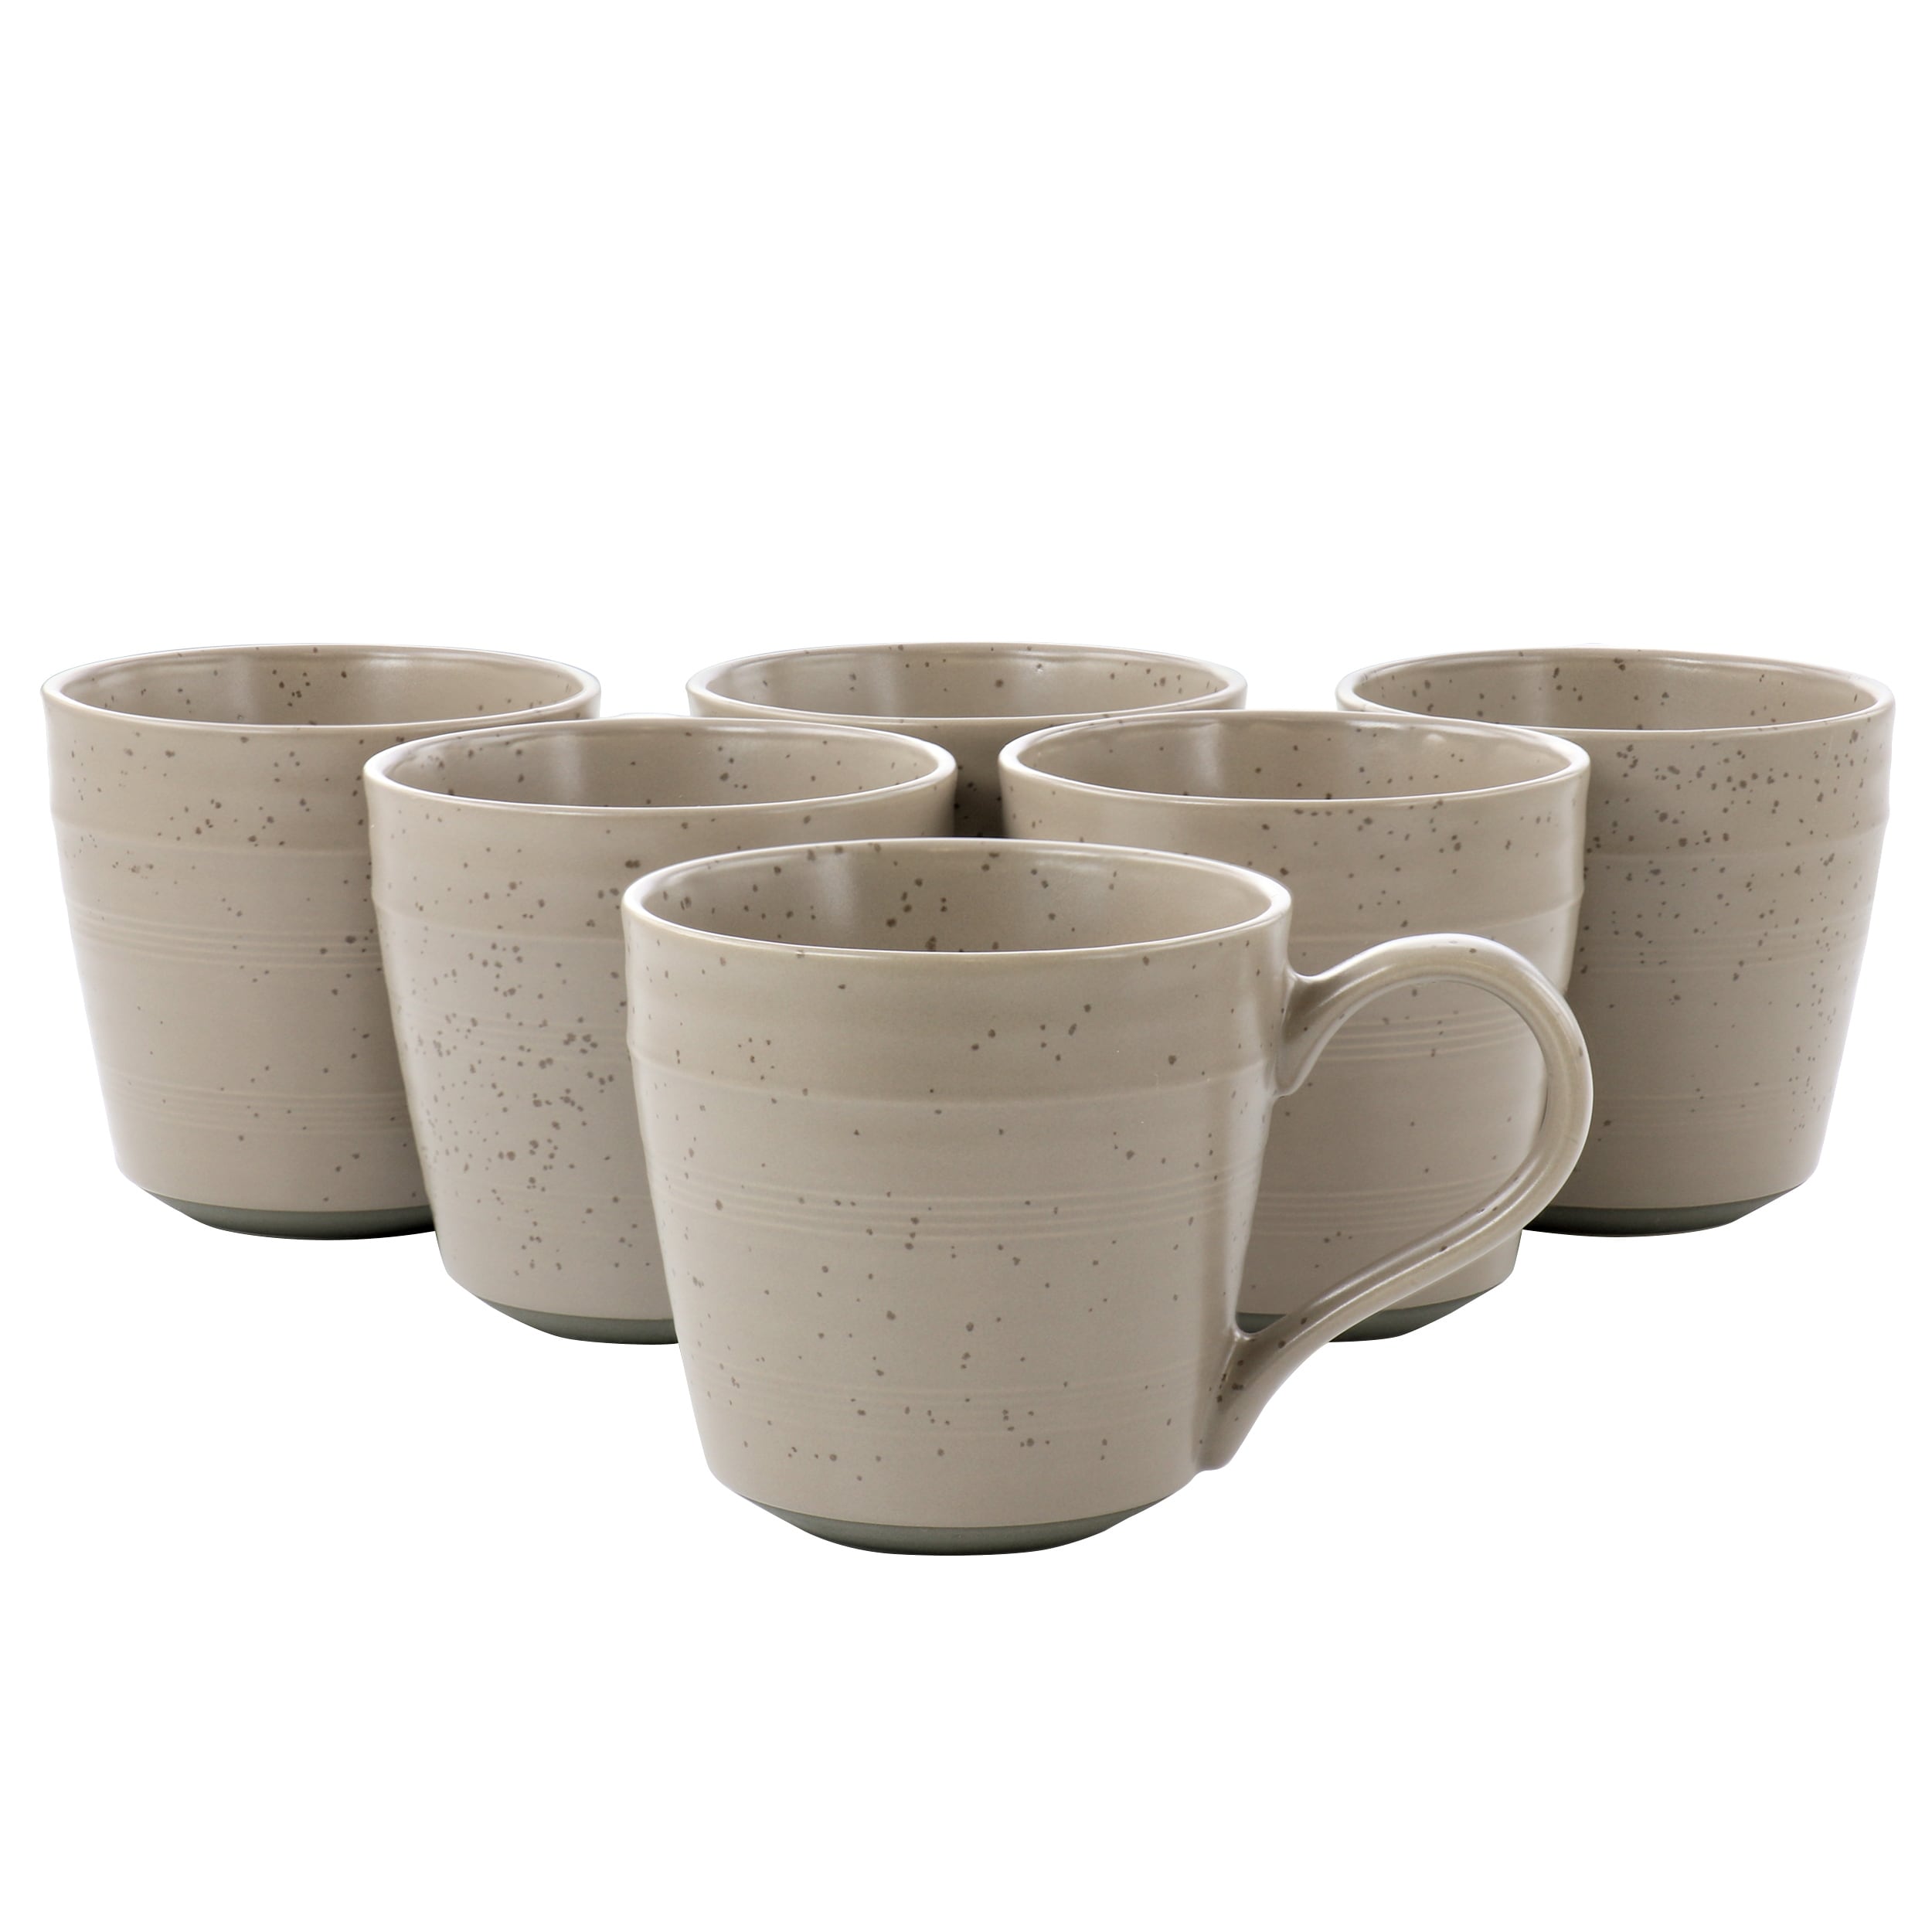 6 Piece 15 Ounce Stoneware Mug Set in Mocha